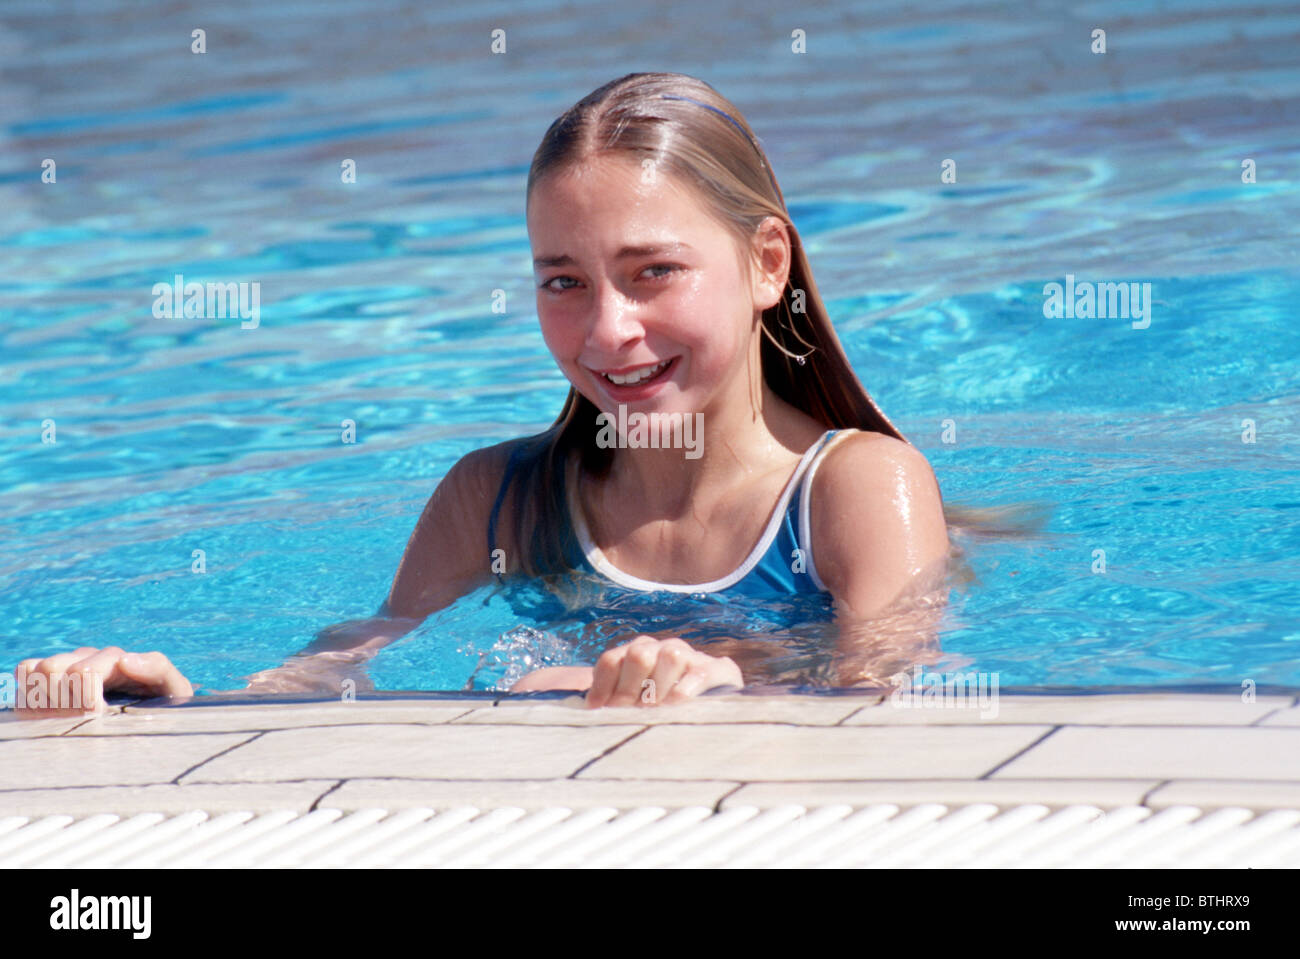 Preteen girl swimming pool Stock Photo